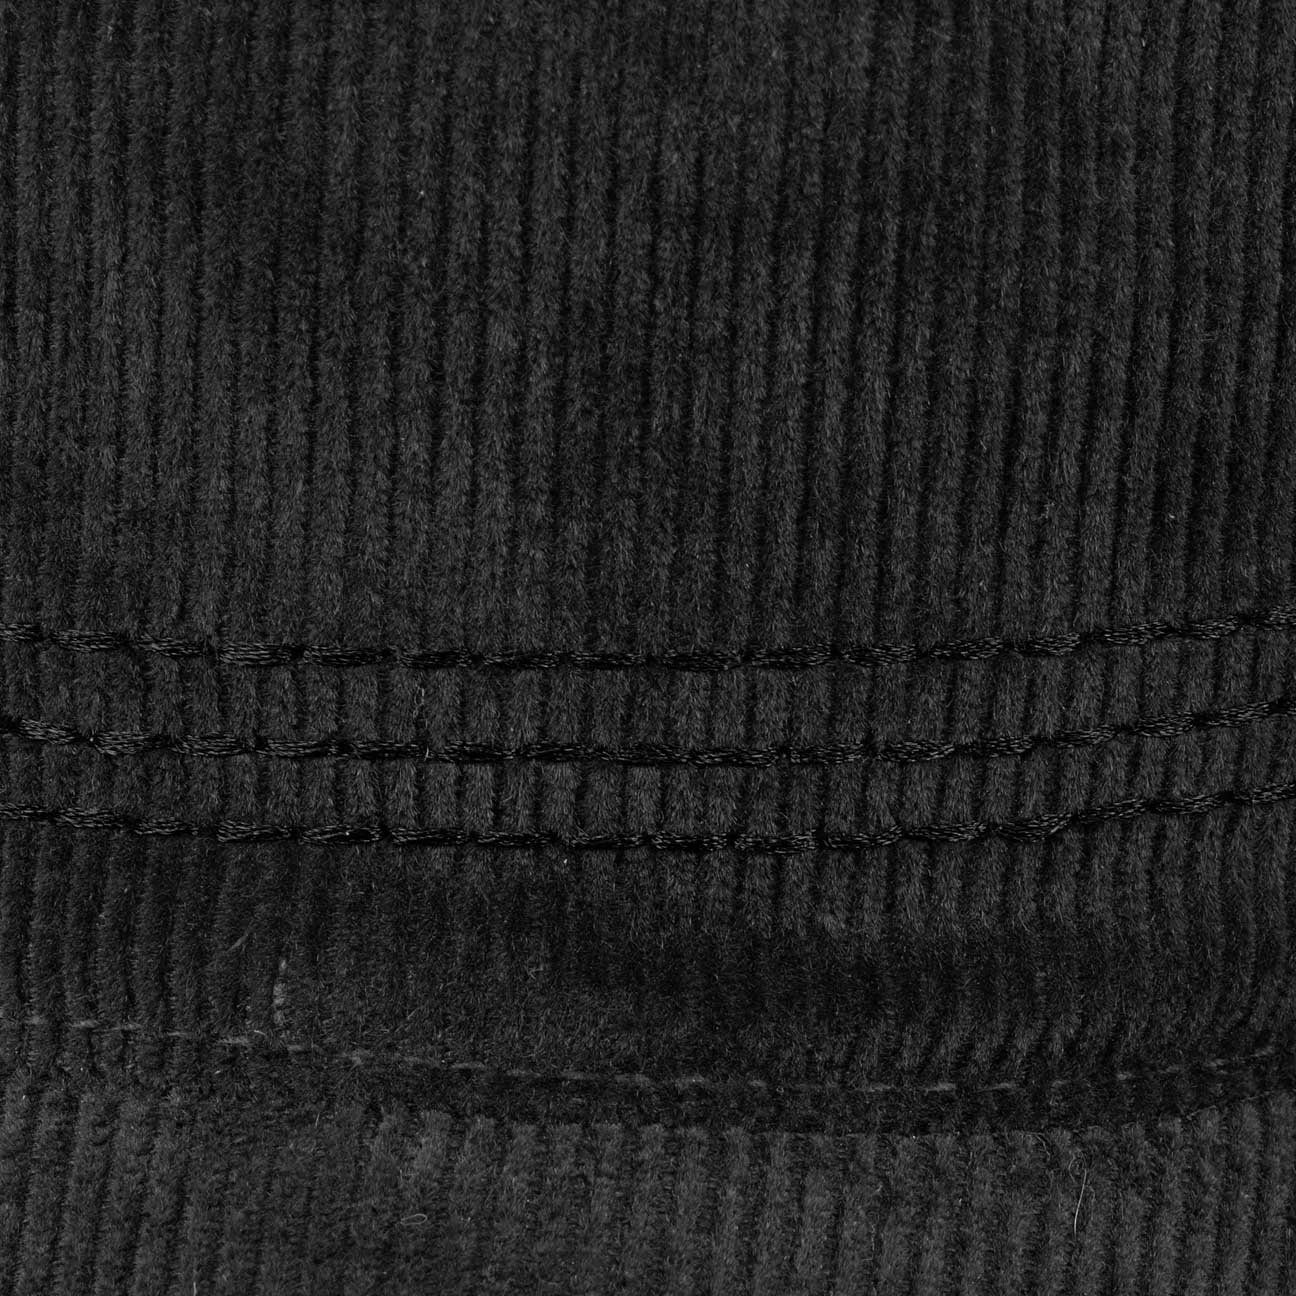 Lipodo Army Cap (1-St) Cordcap schwarz Schirm mit